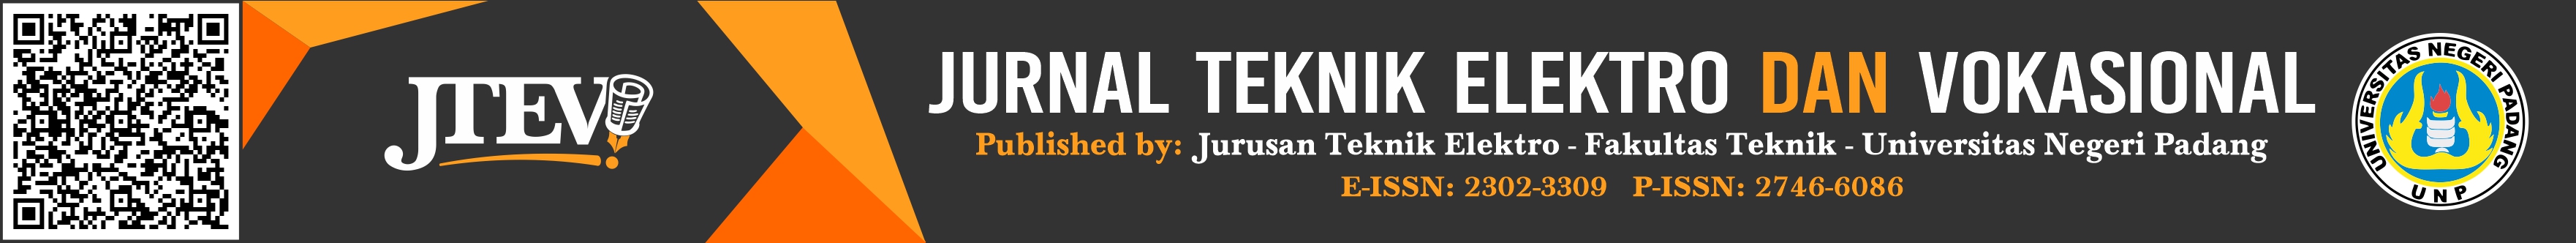 JTEV | JURNAL TEKNIK ELEKTRO DAN VOKASIONAL